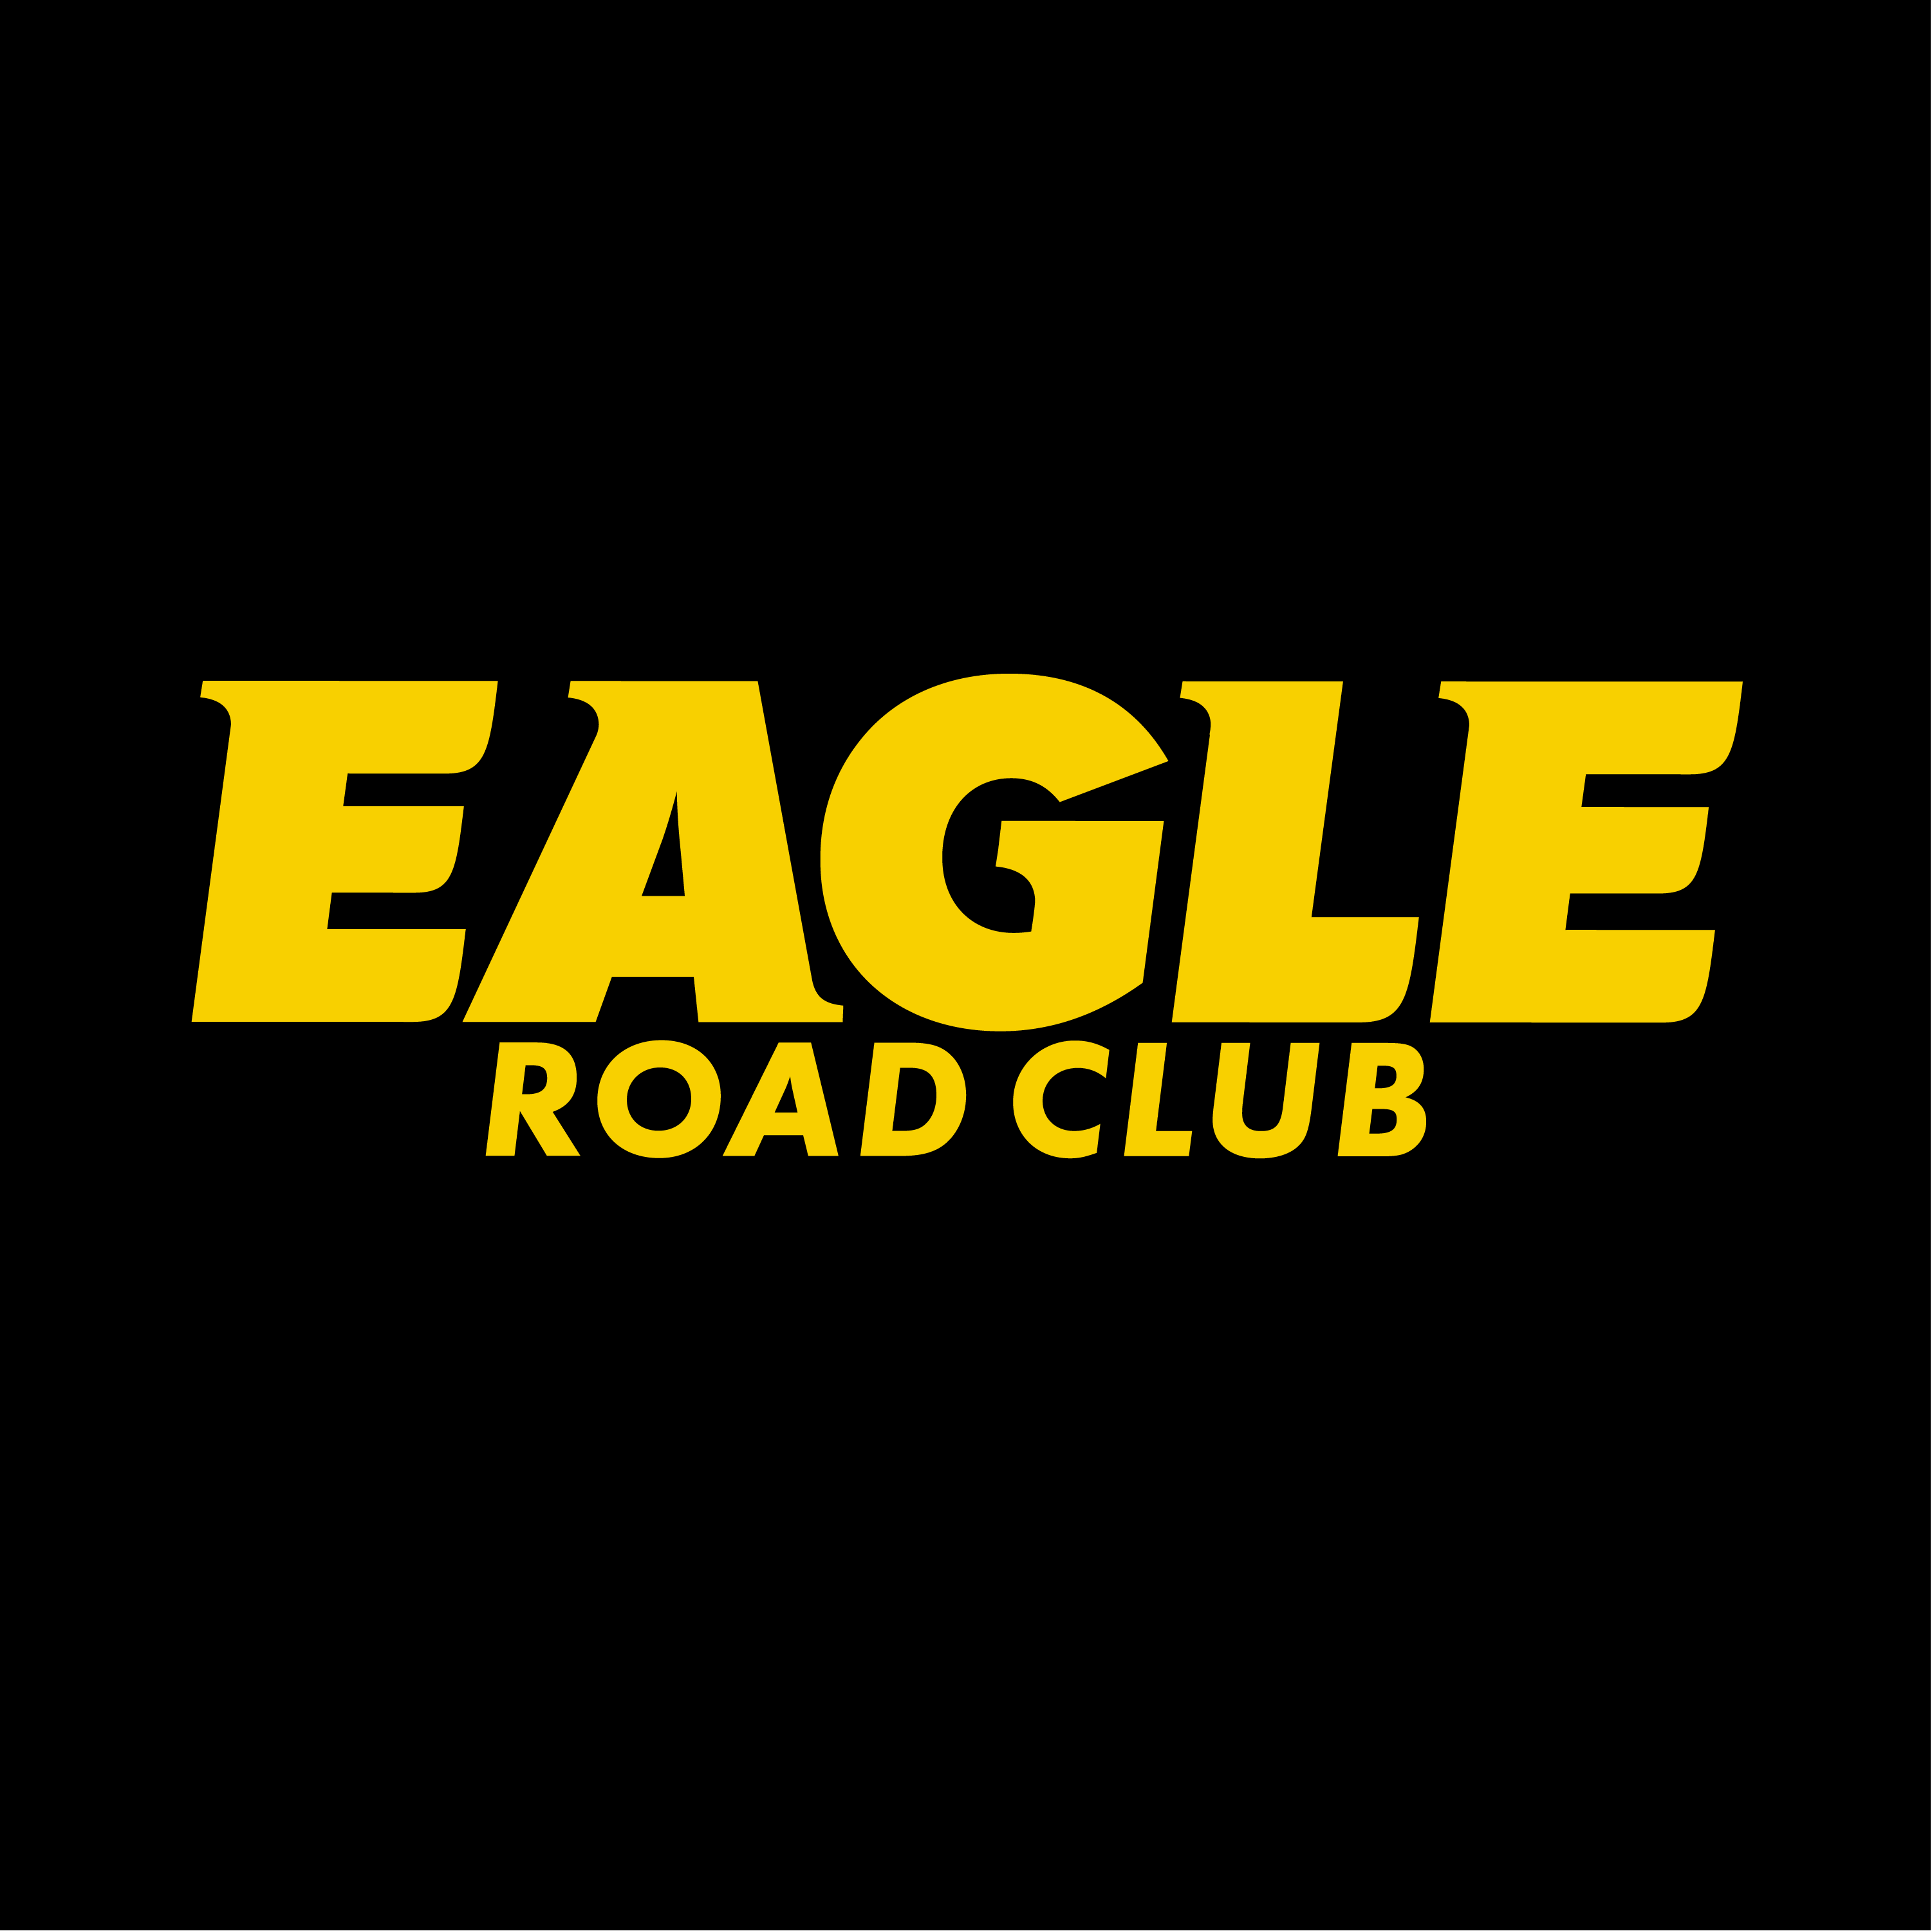 Club Image for EAGLE ROAD CLUB